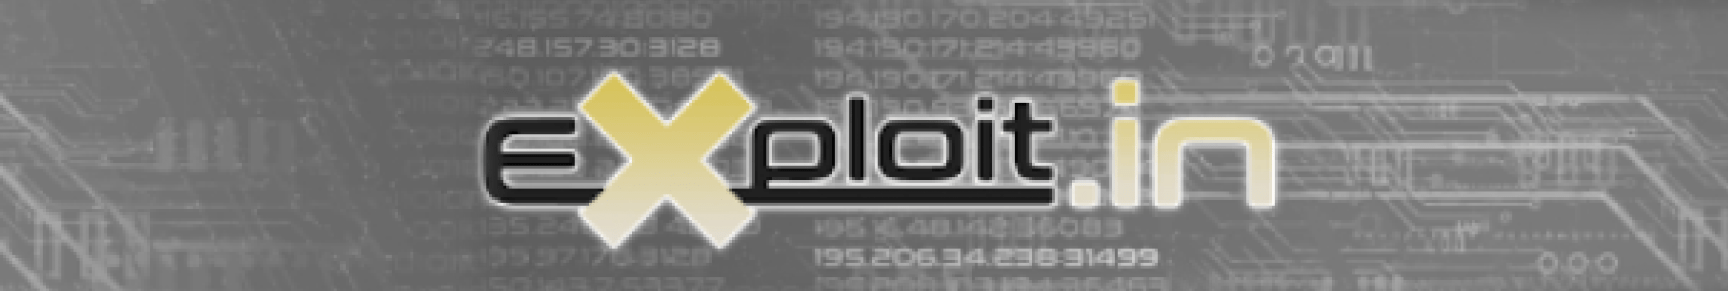 Exploit forum logo